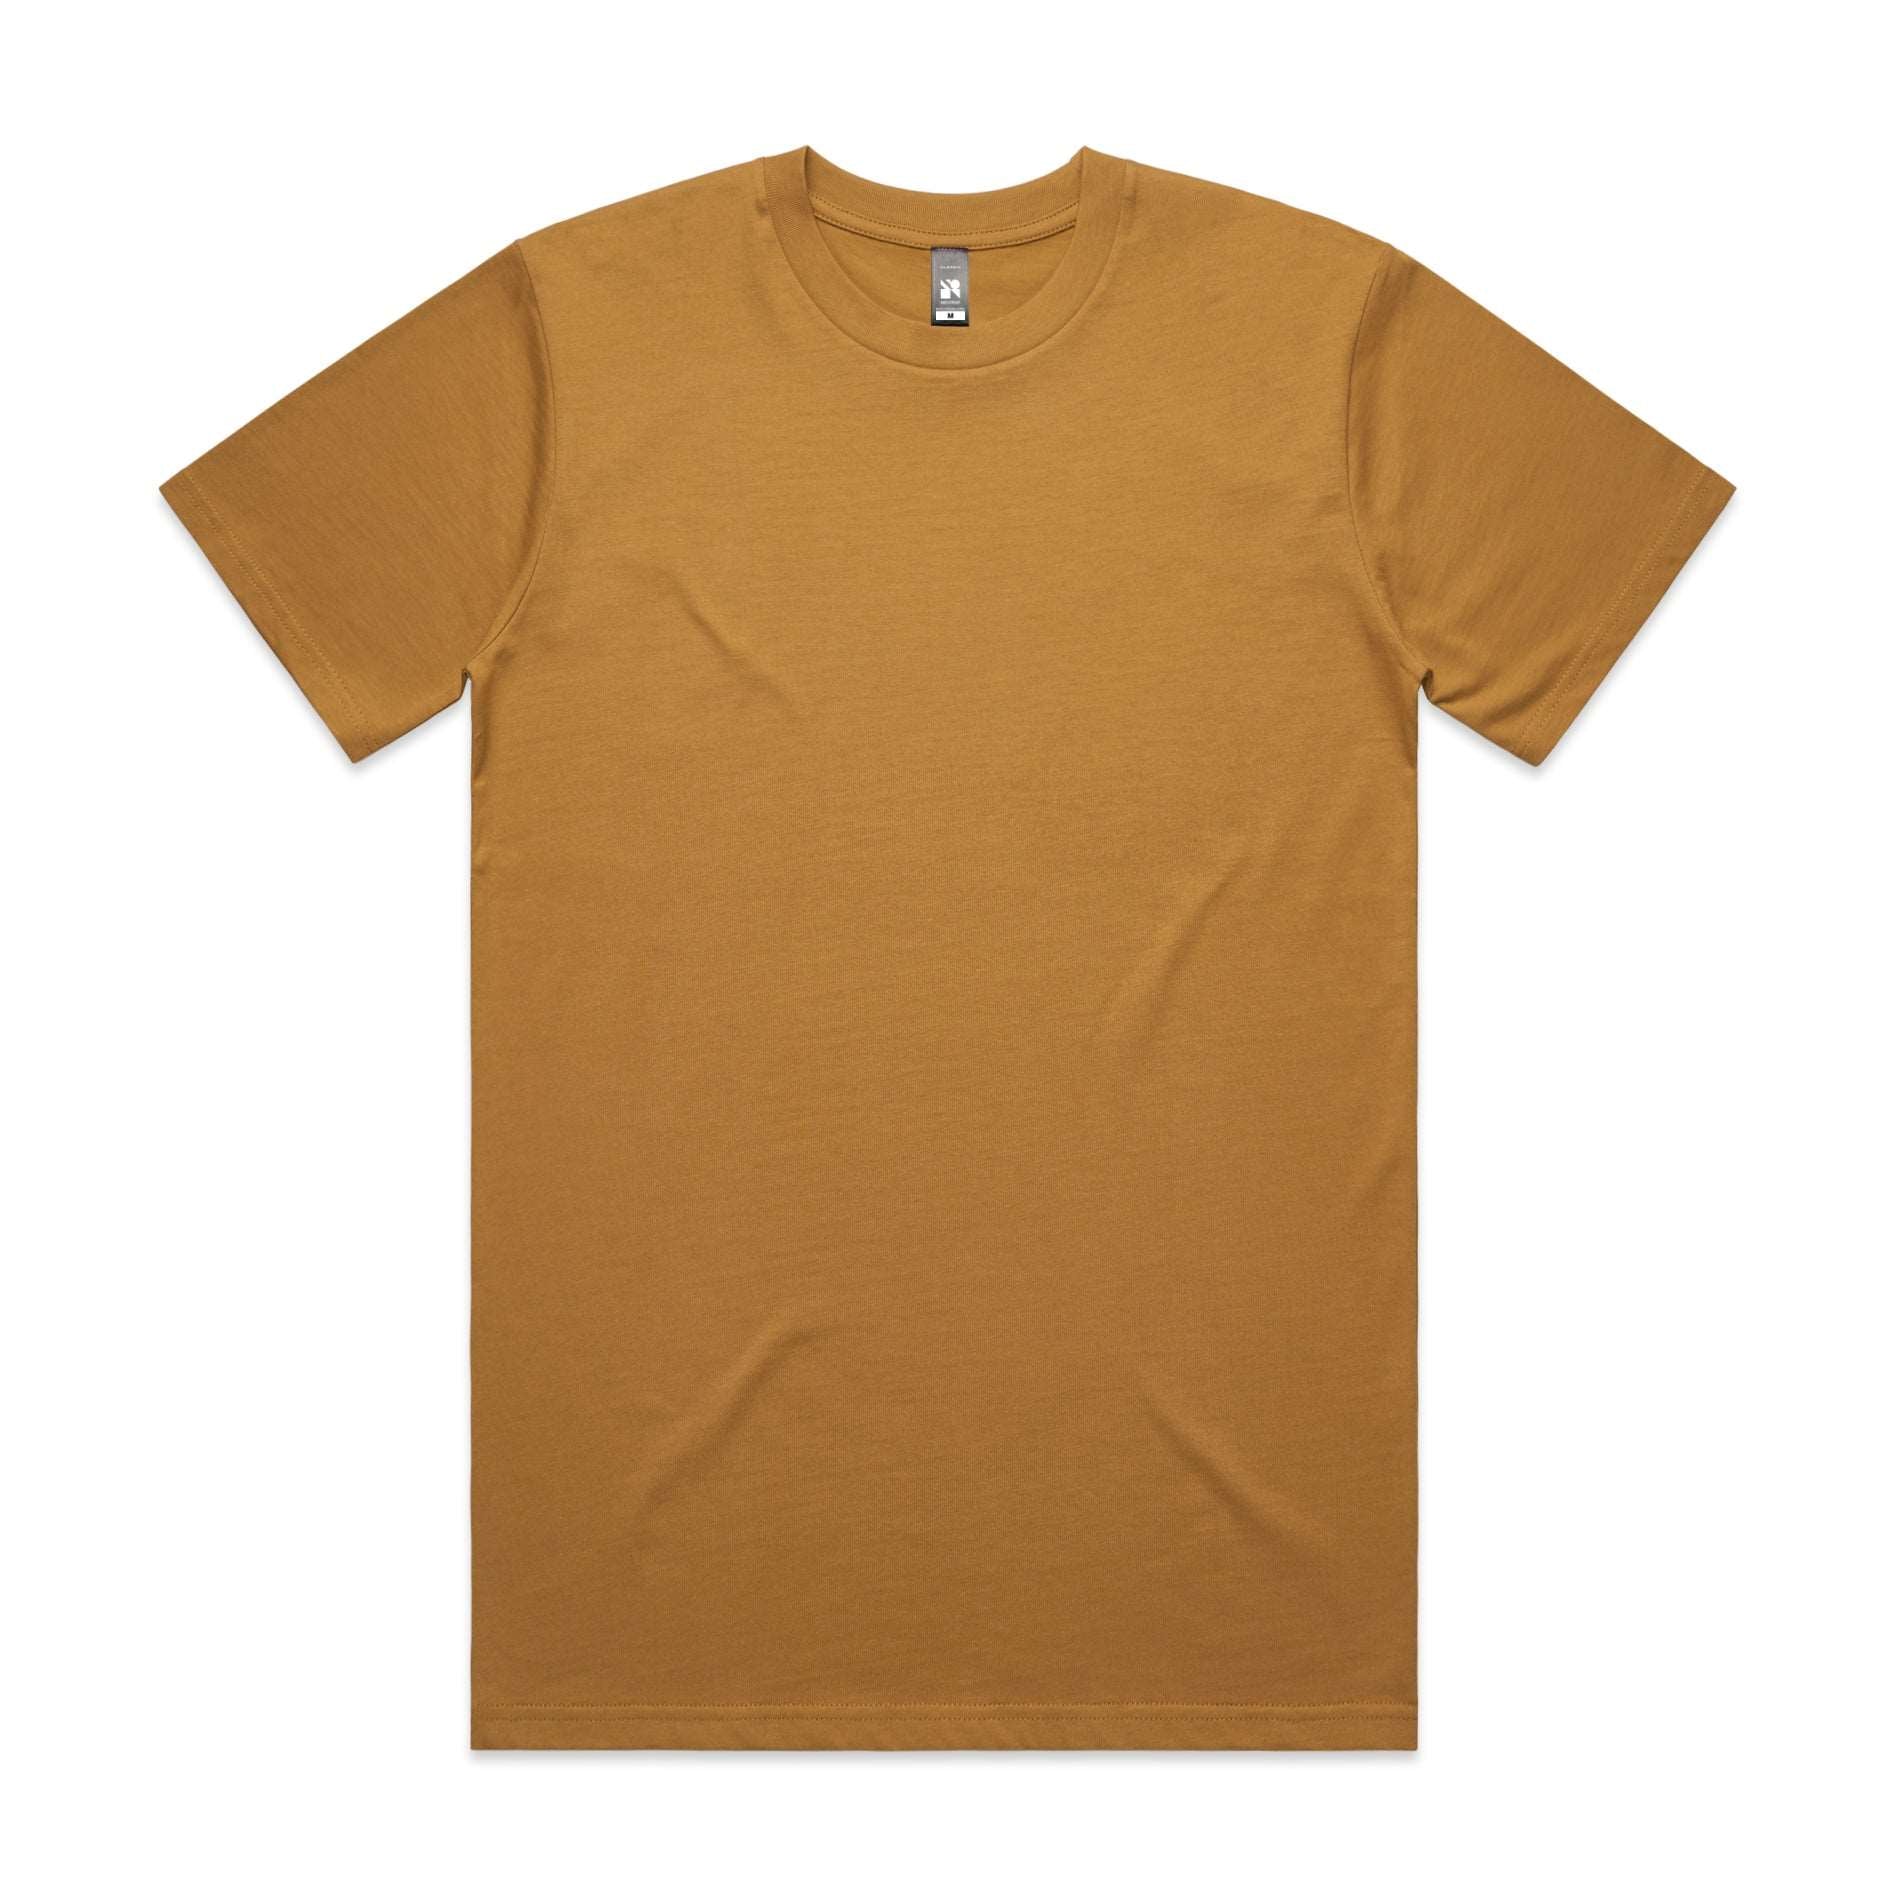 6205 Unisex Best Quality T shirts Plus Sizes